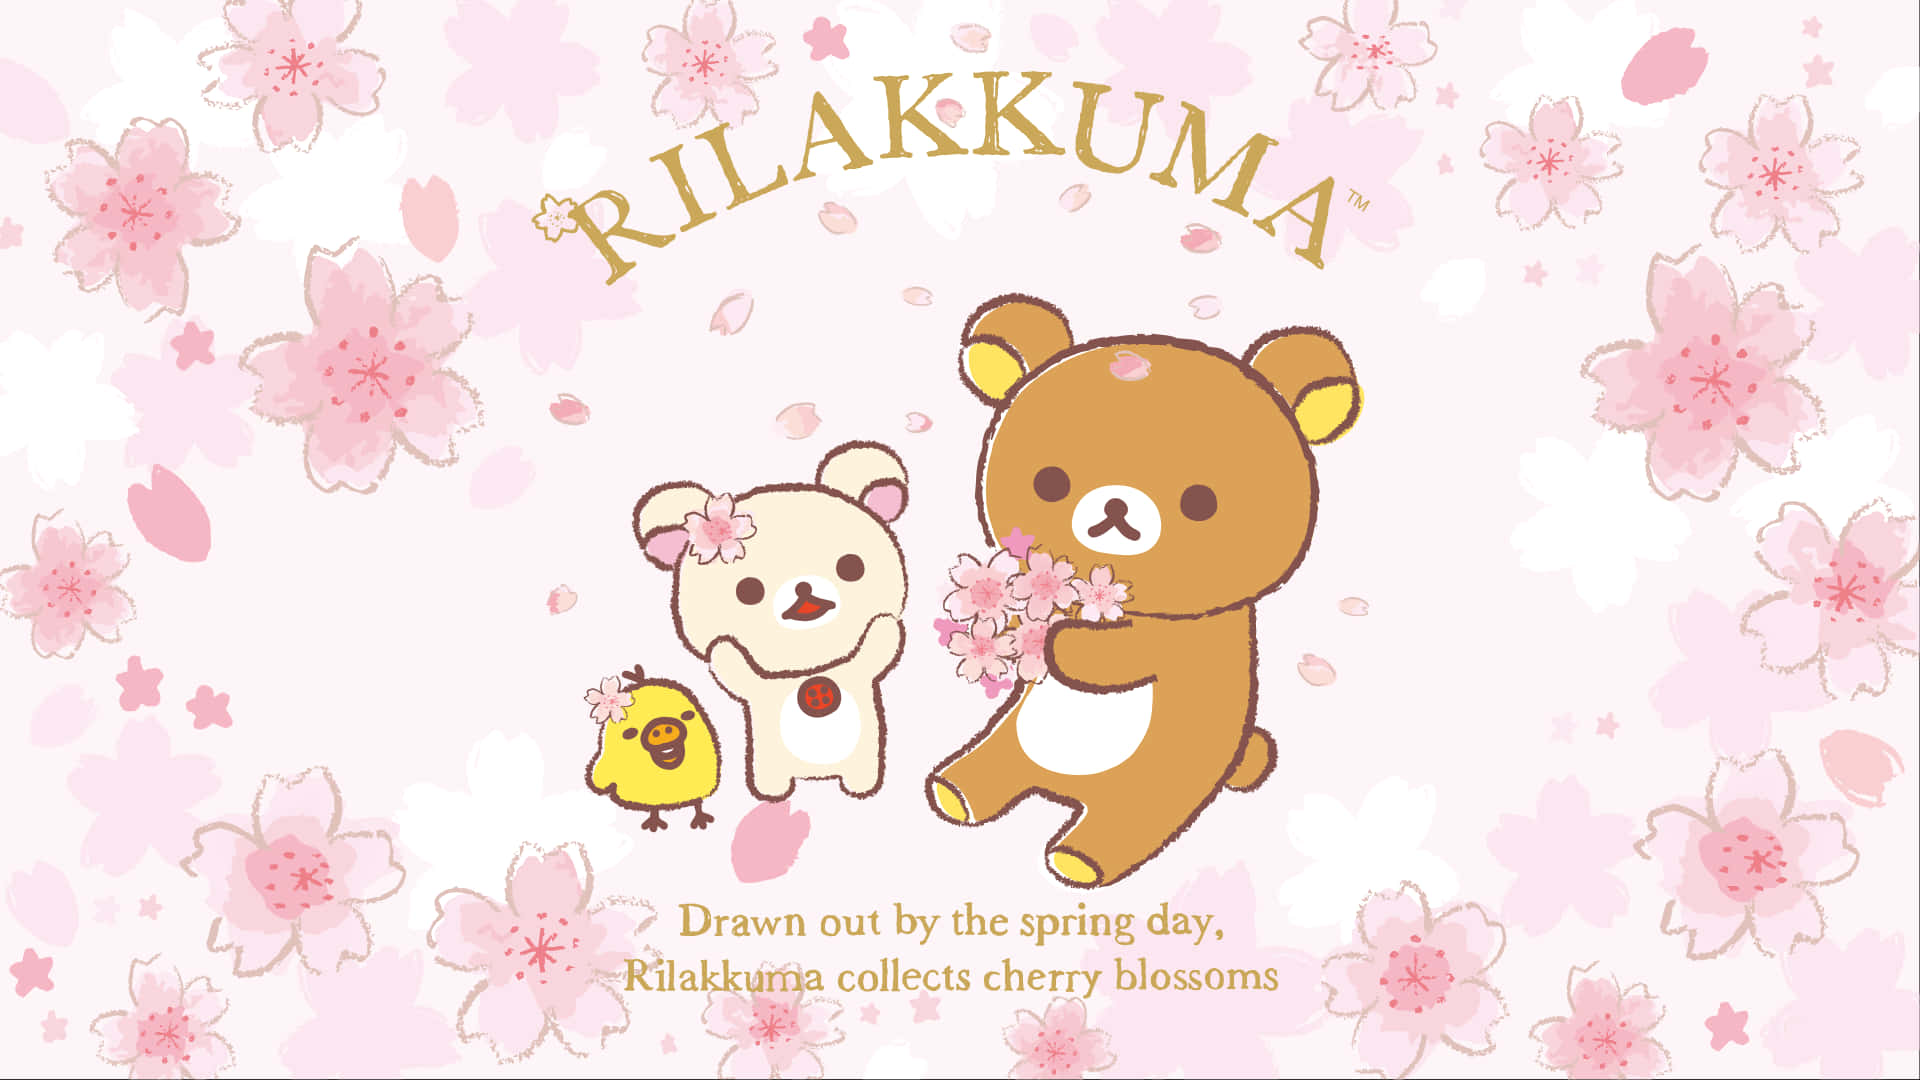 "Feel the comfort of Rilakkuma, wherever your work takes you!" Wallpaper